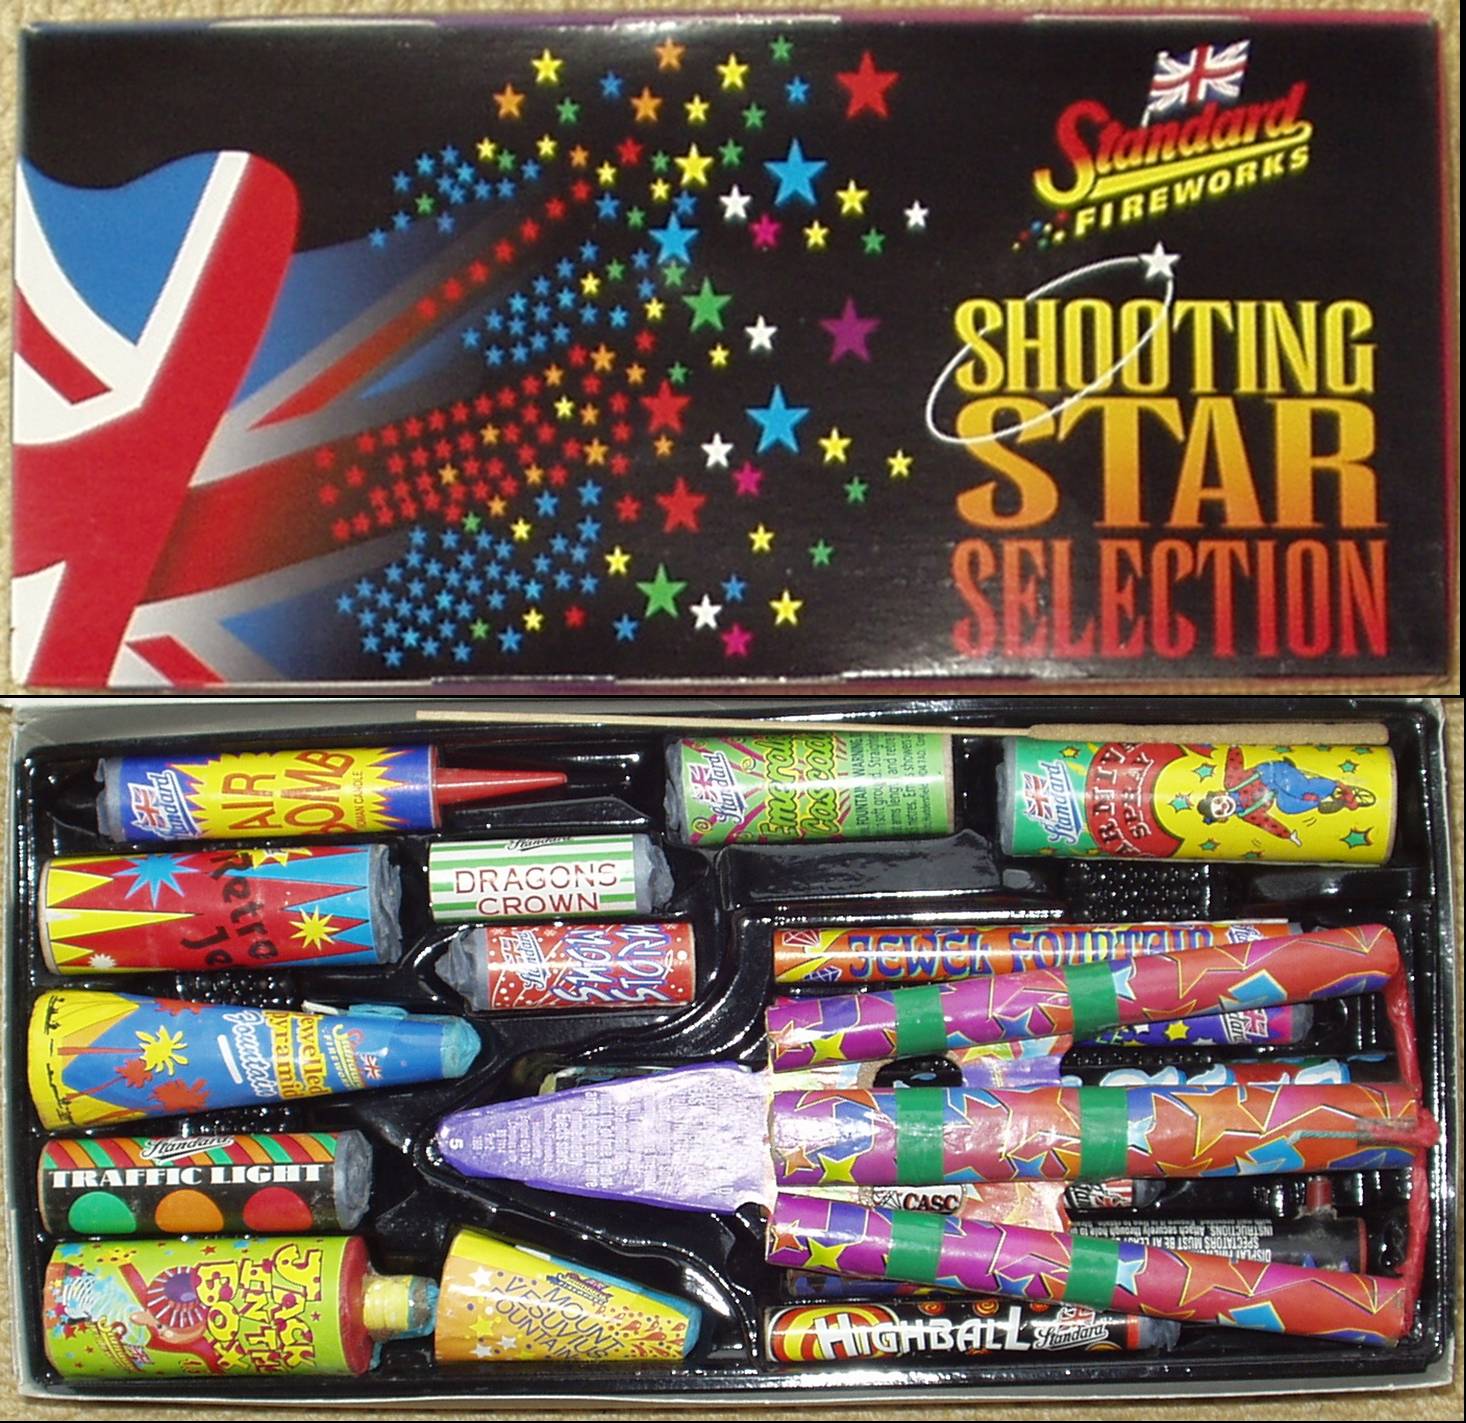 Standard Fireworks Selection Box Poster - 2005